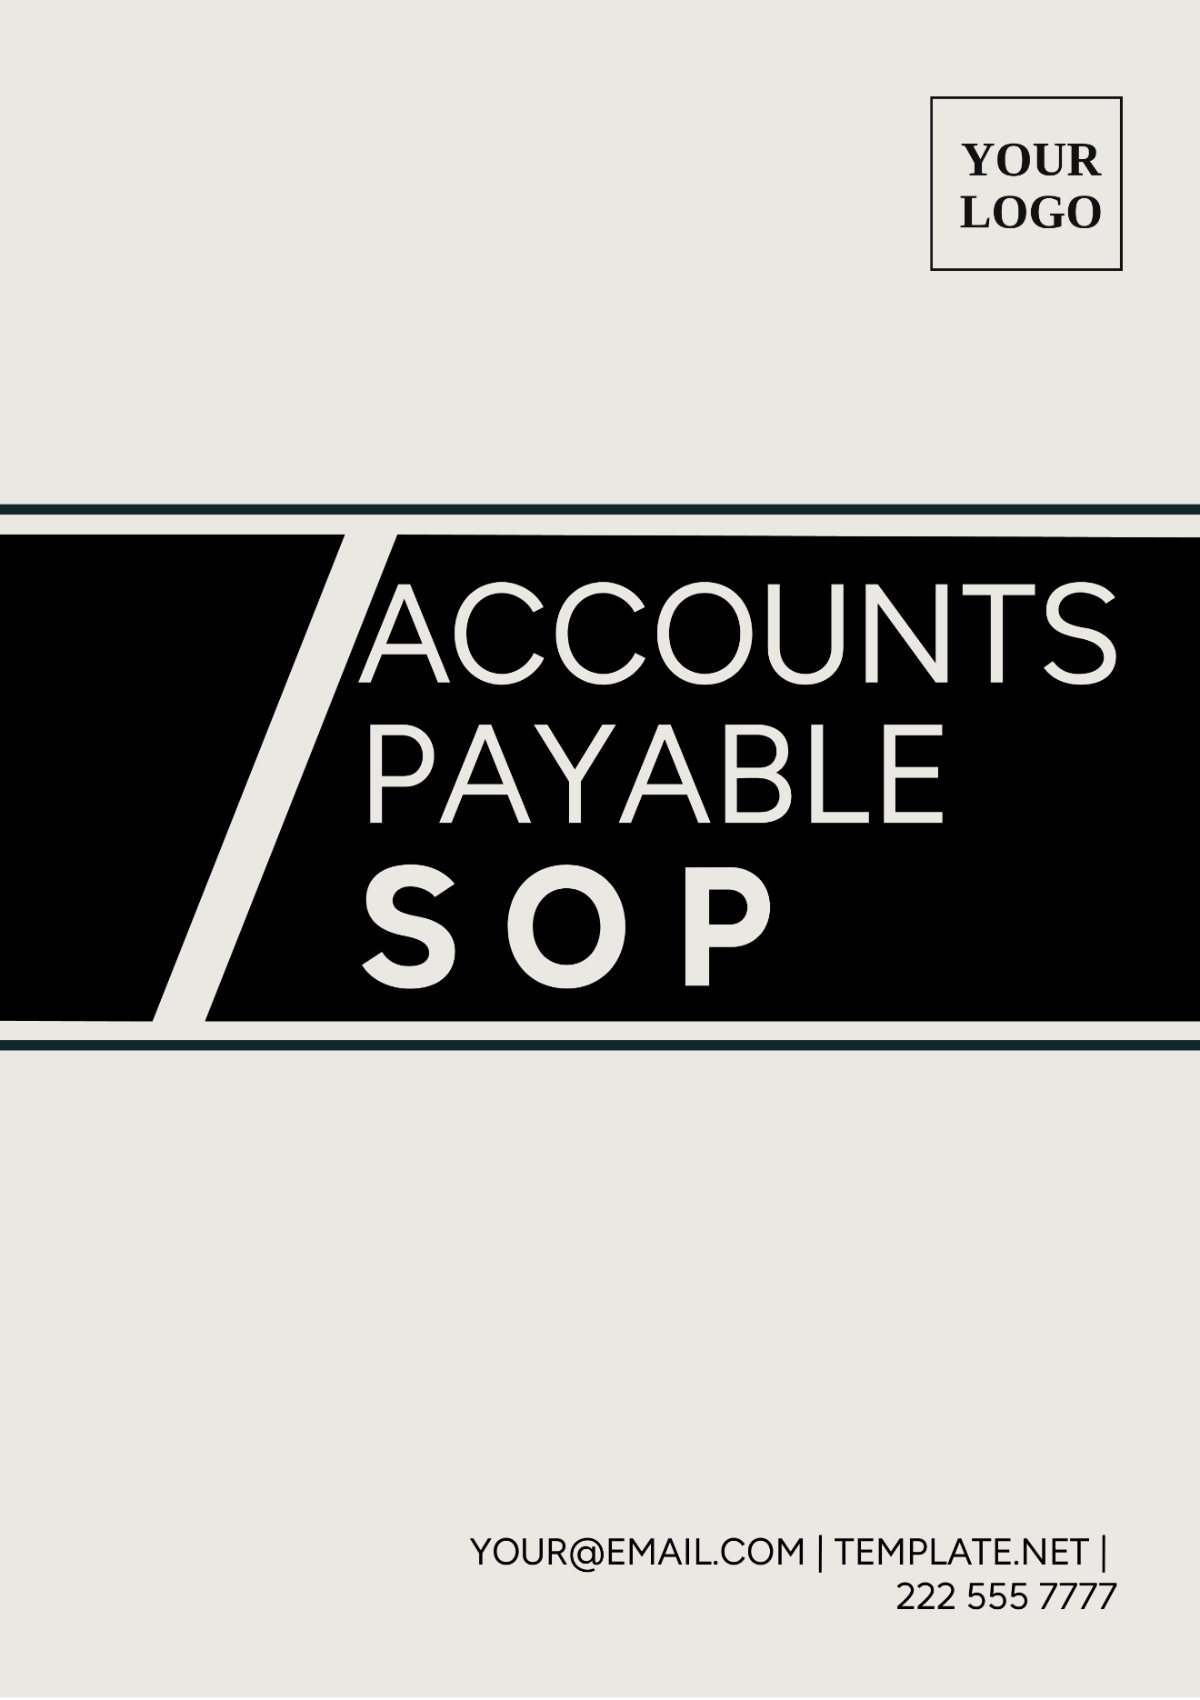 Free Accounts Payable SOP Template